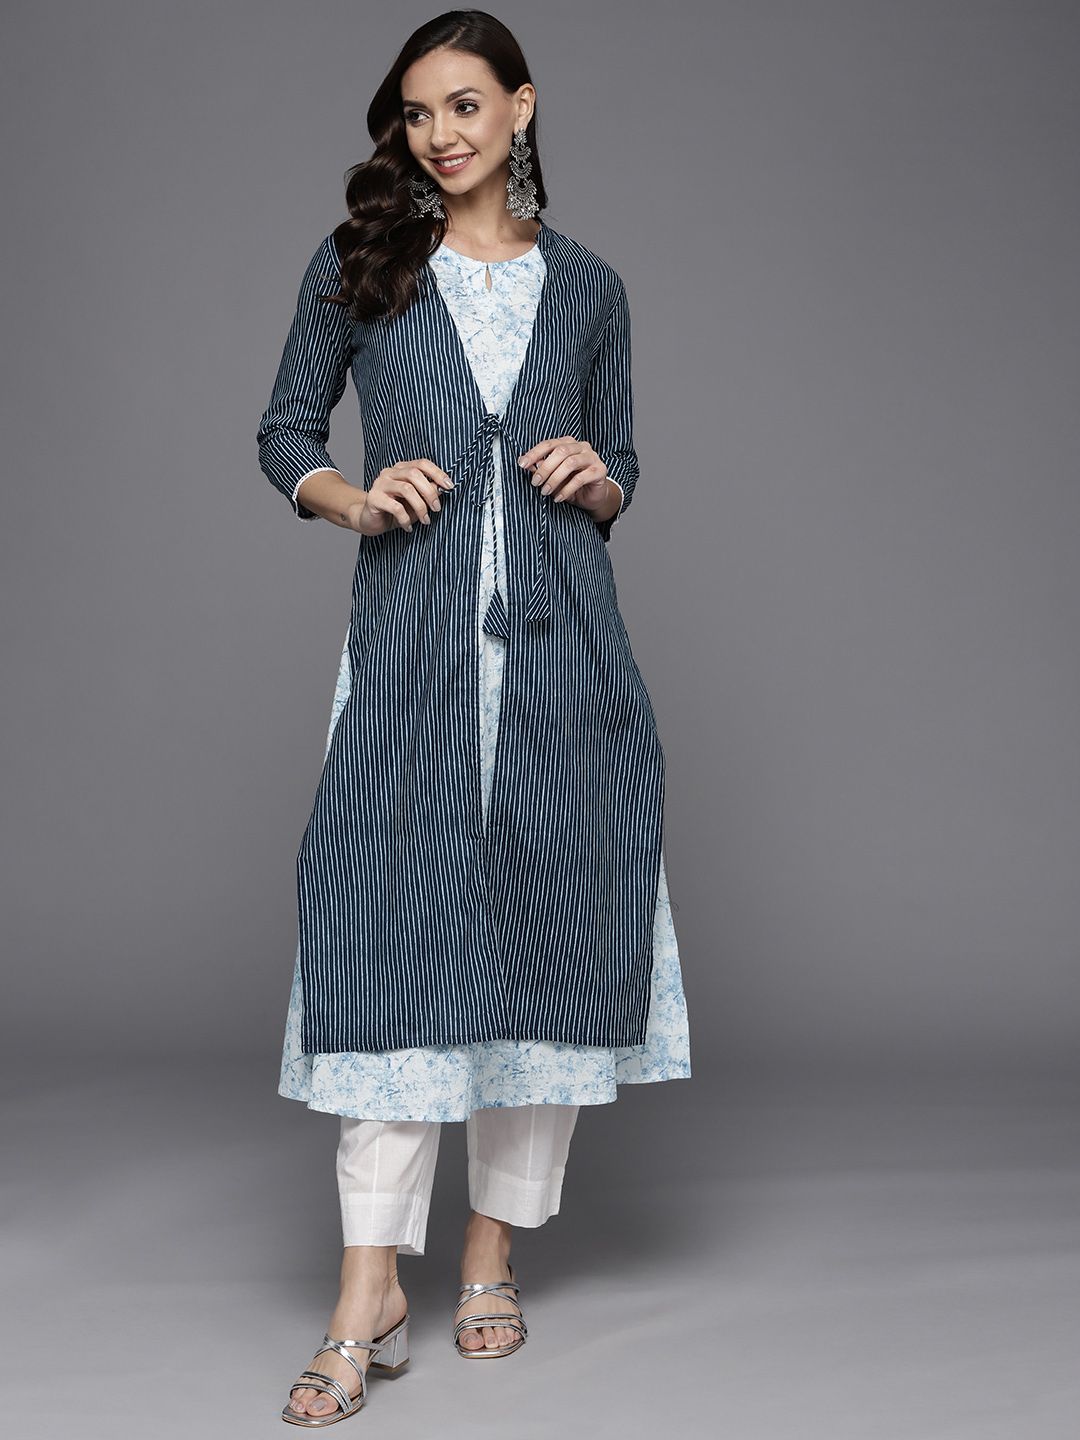 Indo Era Women Blue & White Printed Pure Cotton Kurta with Jacket Price in India